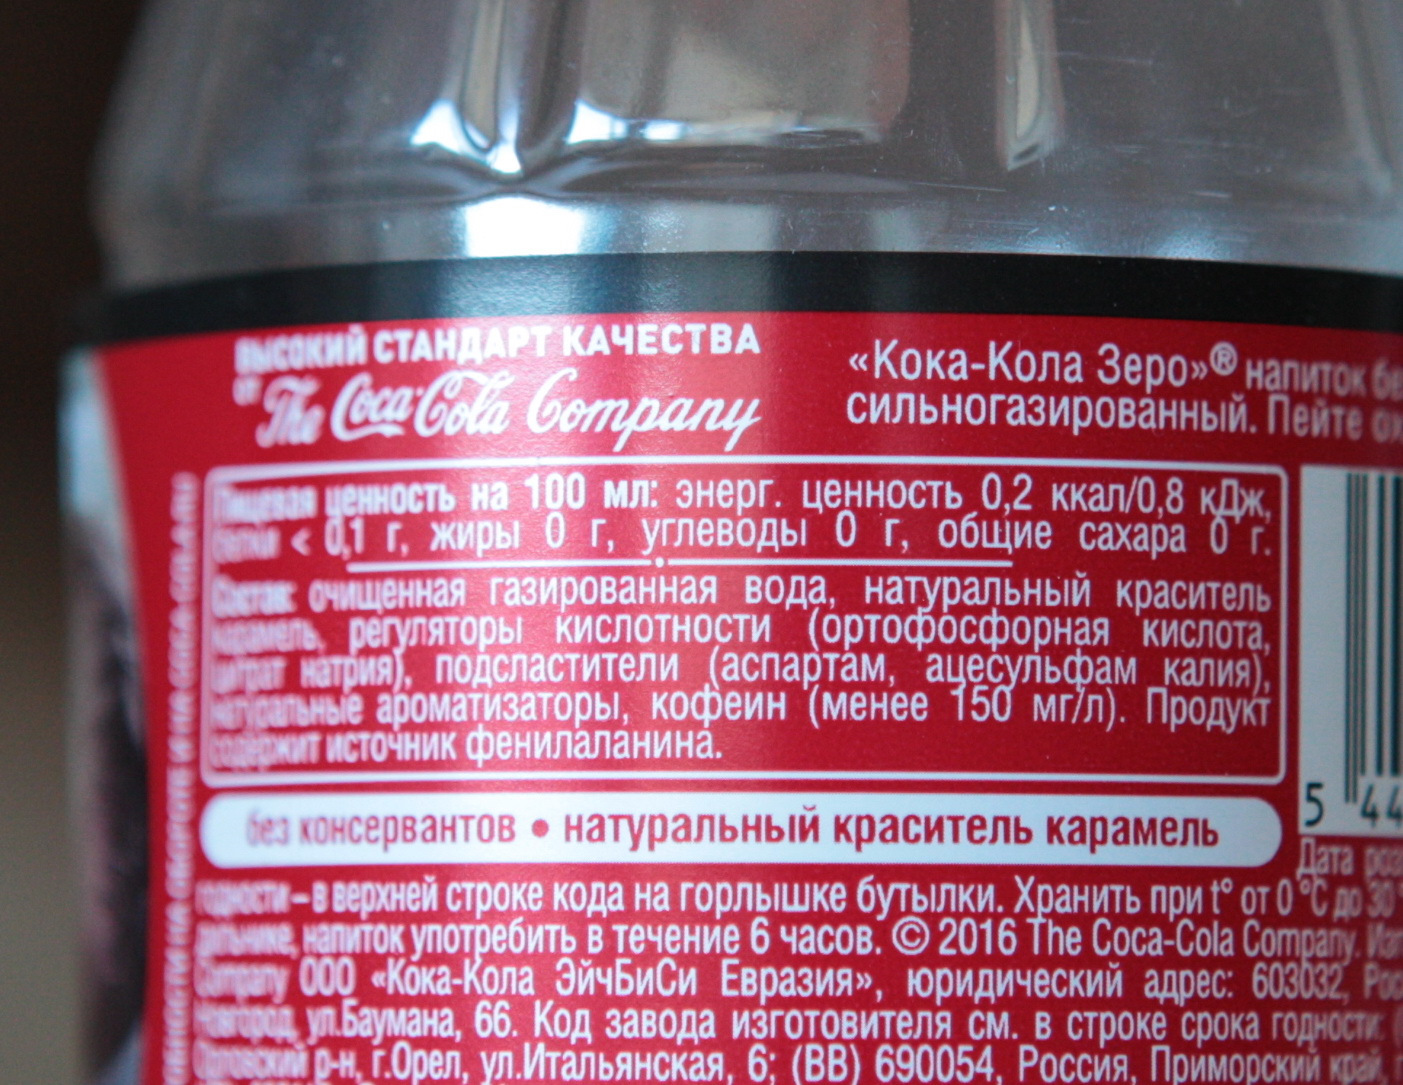 Вода без сахара и калорий. Состав Кока колы на этикетке. Состав Кока колы 0.5. Кола этикетка с составом. Этикетки продуктов.